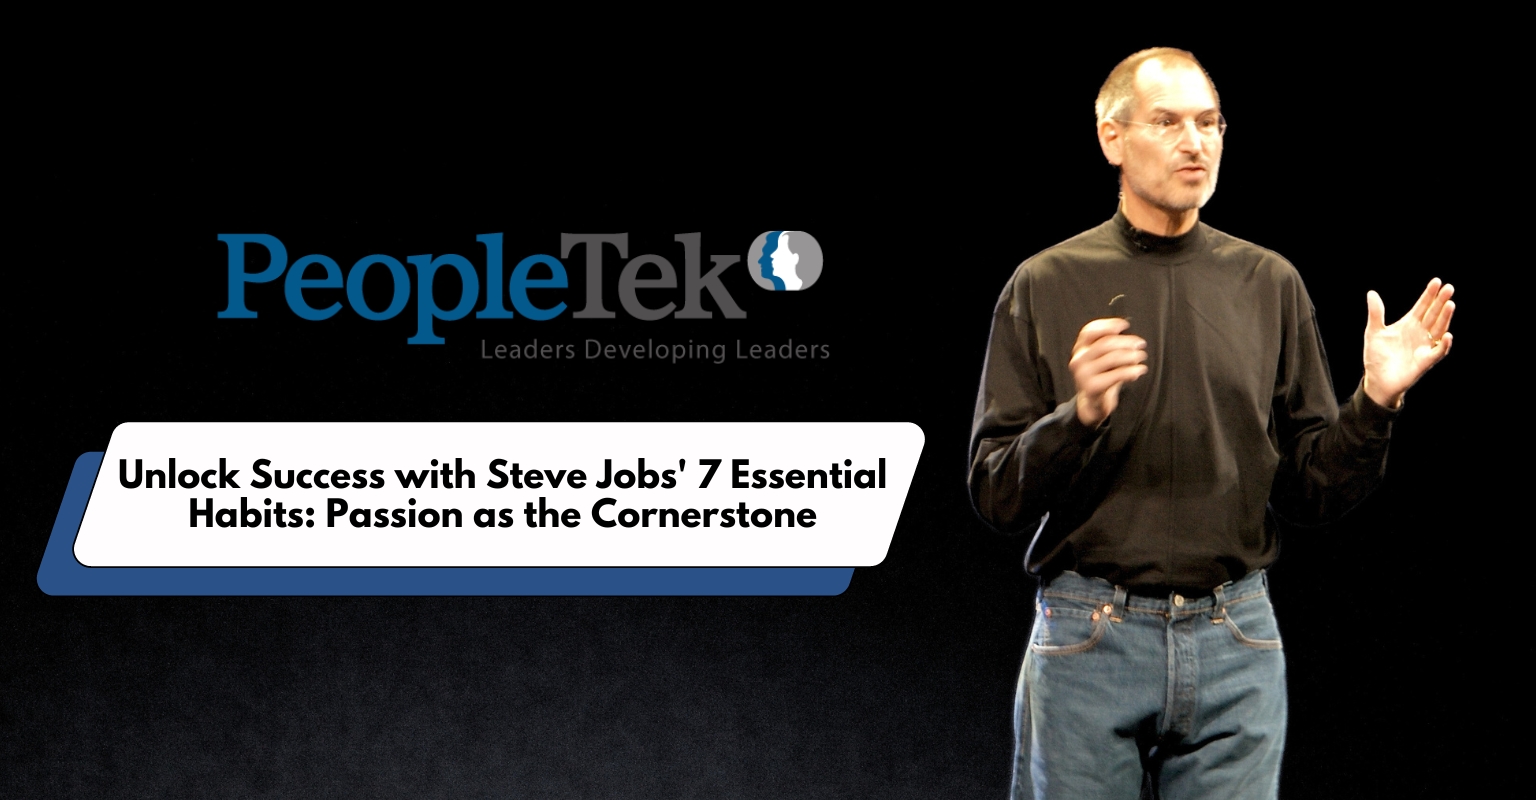 Steve Jobs' Blueprint for Success Illustrated